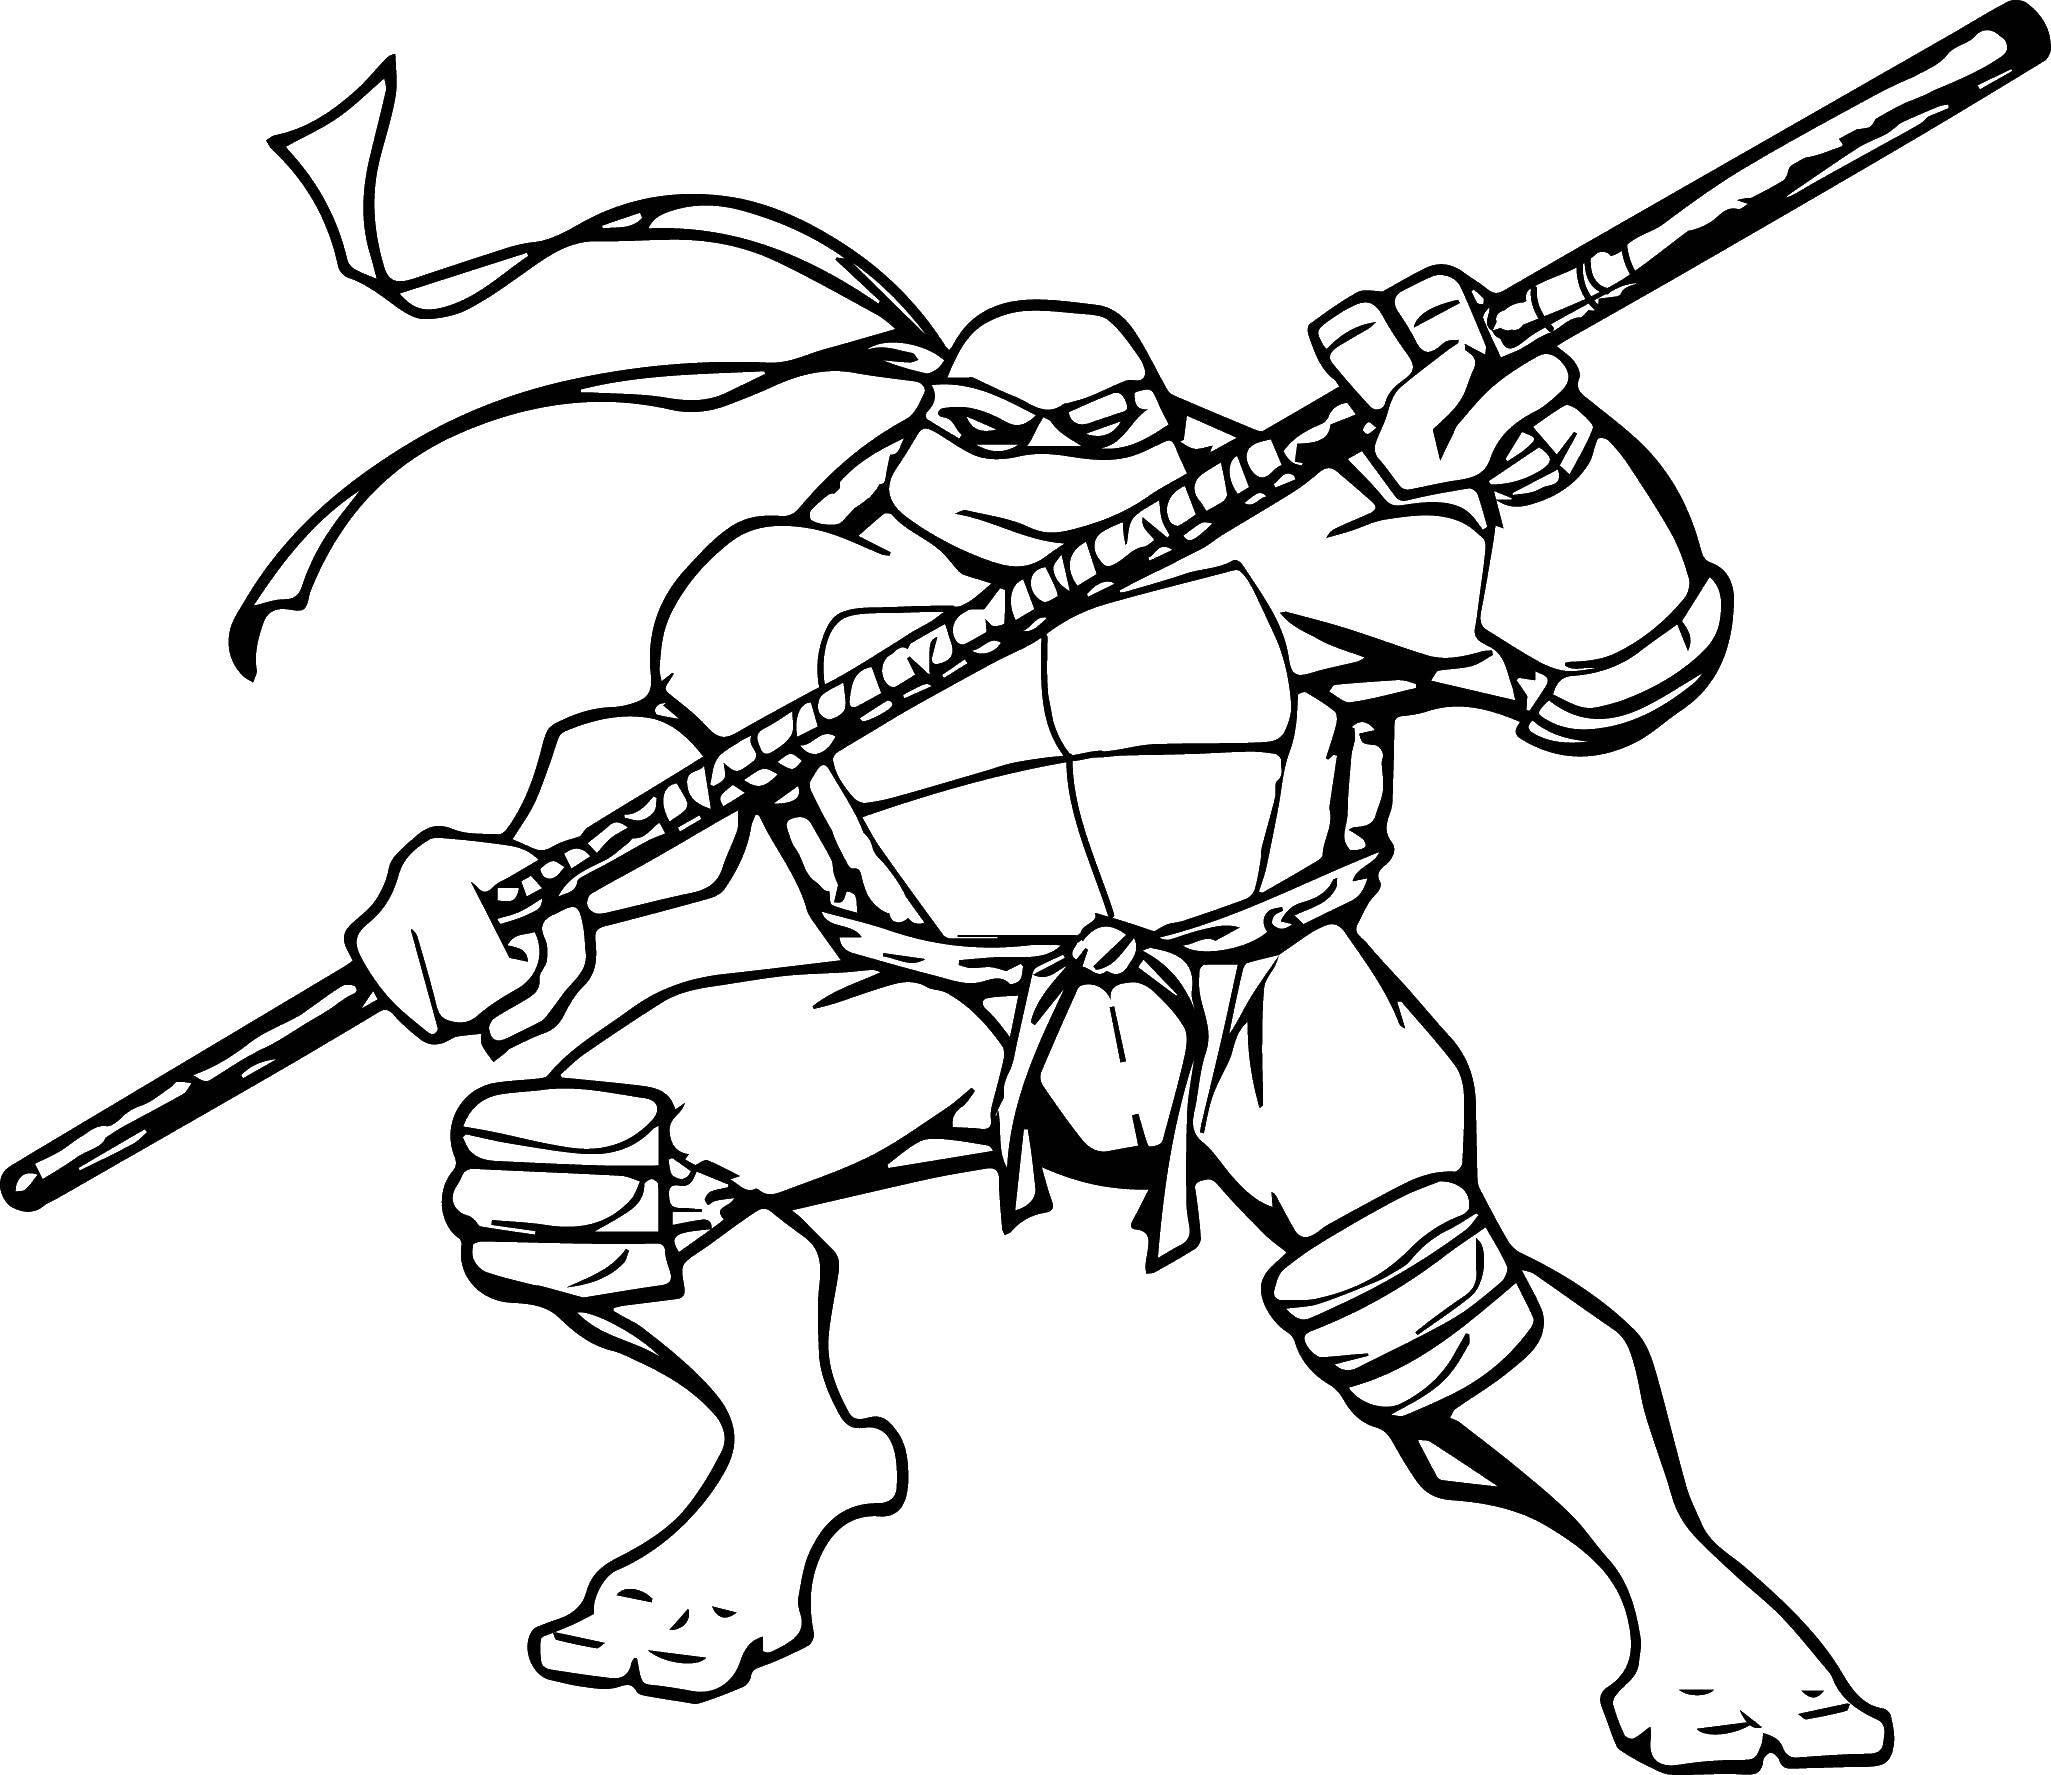 Coloring Ninja turtle weapons. Category teenage mutant ninja turtles. Tags:  cartoon ninja turtles.